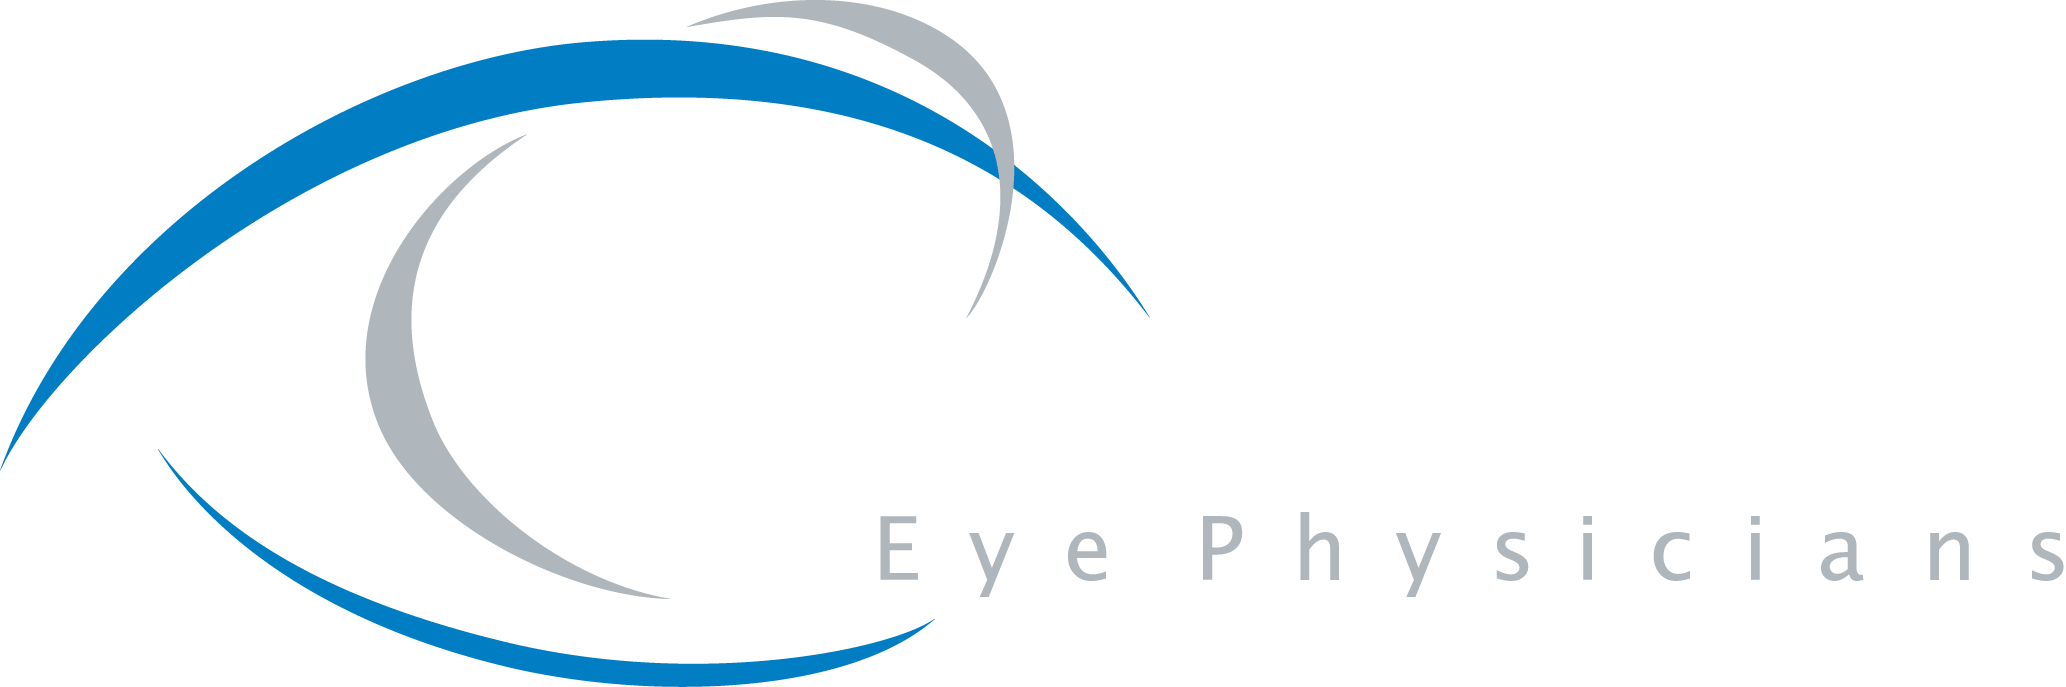 Spectrum Eye Physicians logo